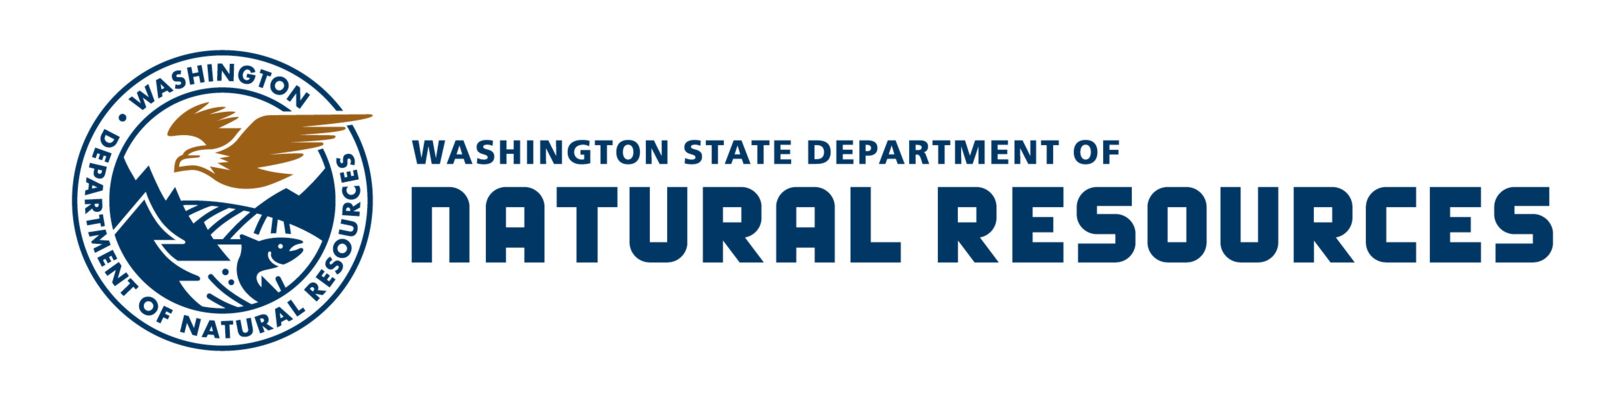 Washington Dept. of Natural Resources Seeks UCF Technician (2 Positions Open!)